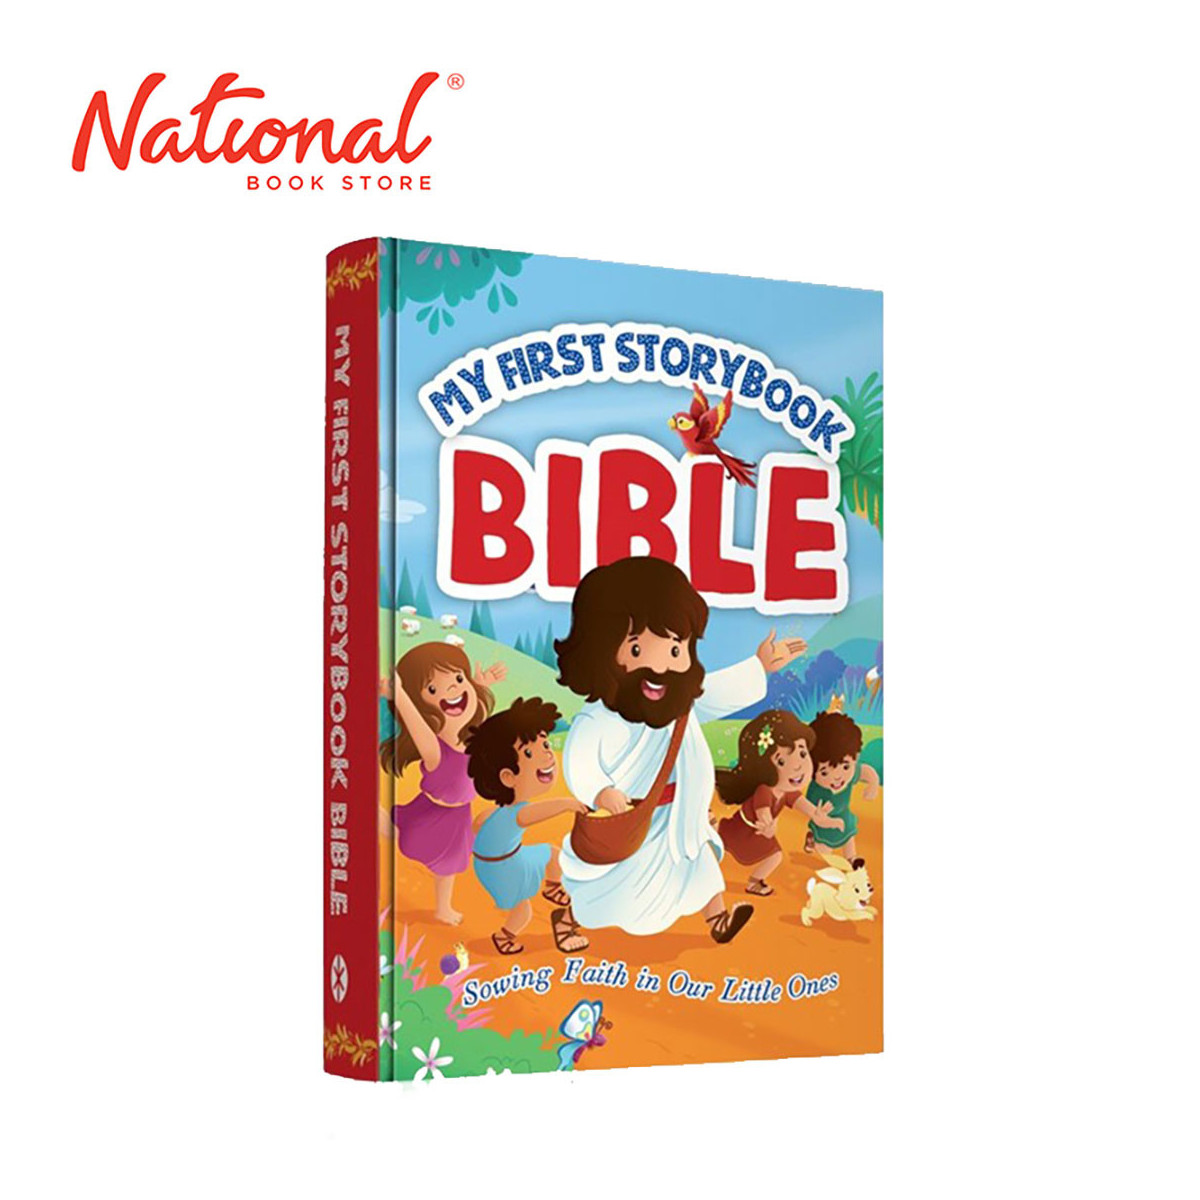 My First Storybook Bible By Karoline Pedersen - Hardcover - Books for Kids